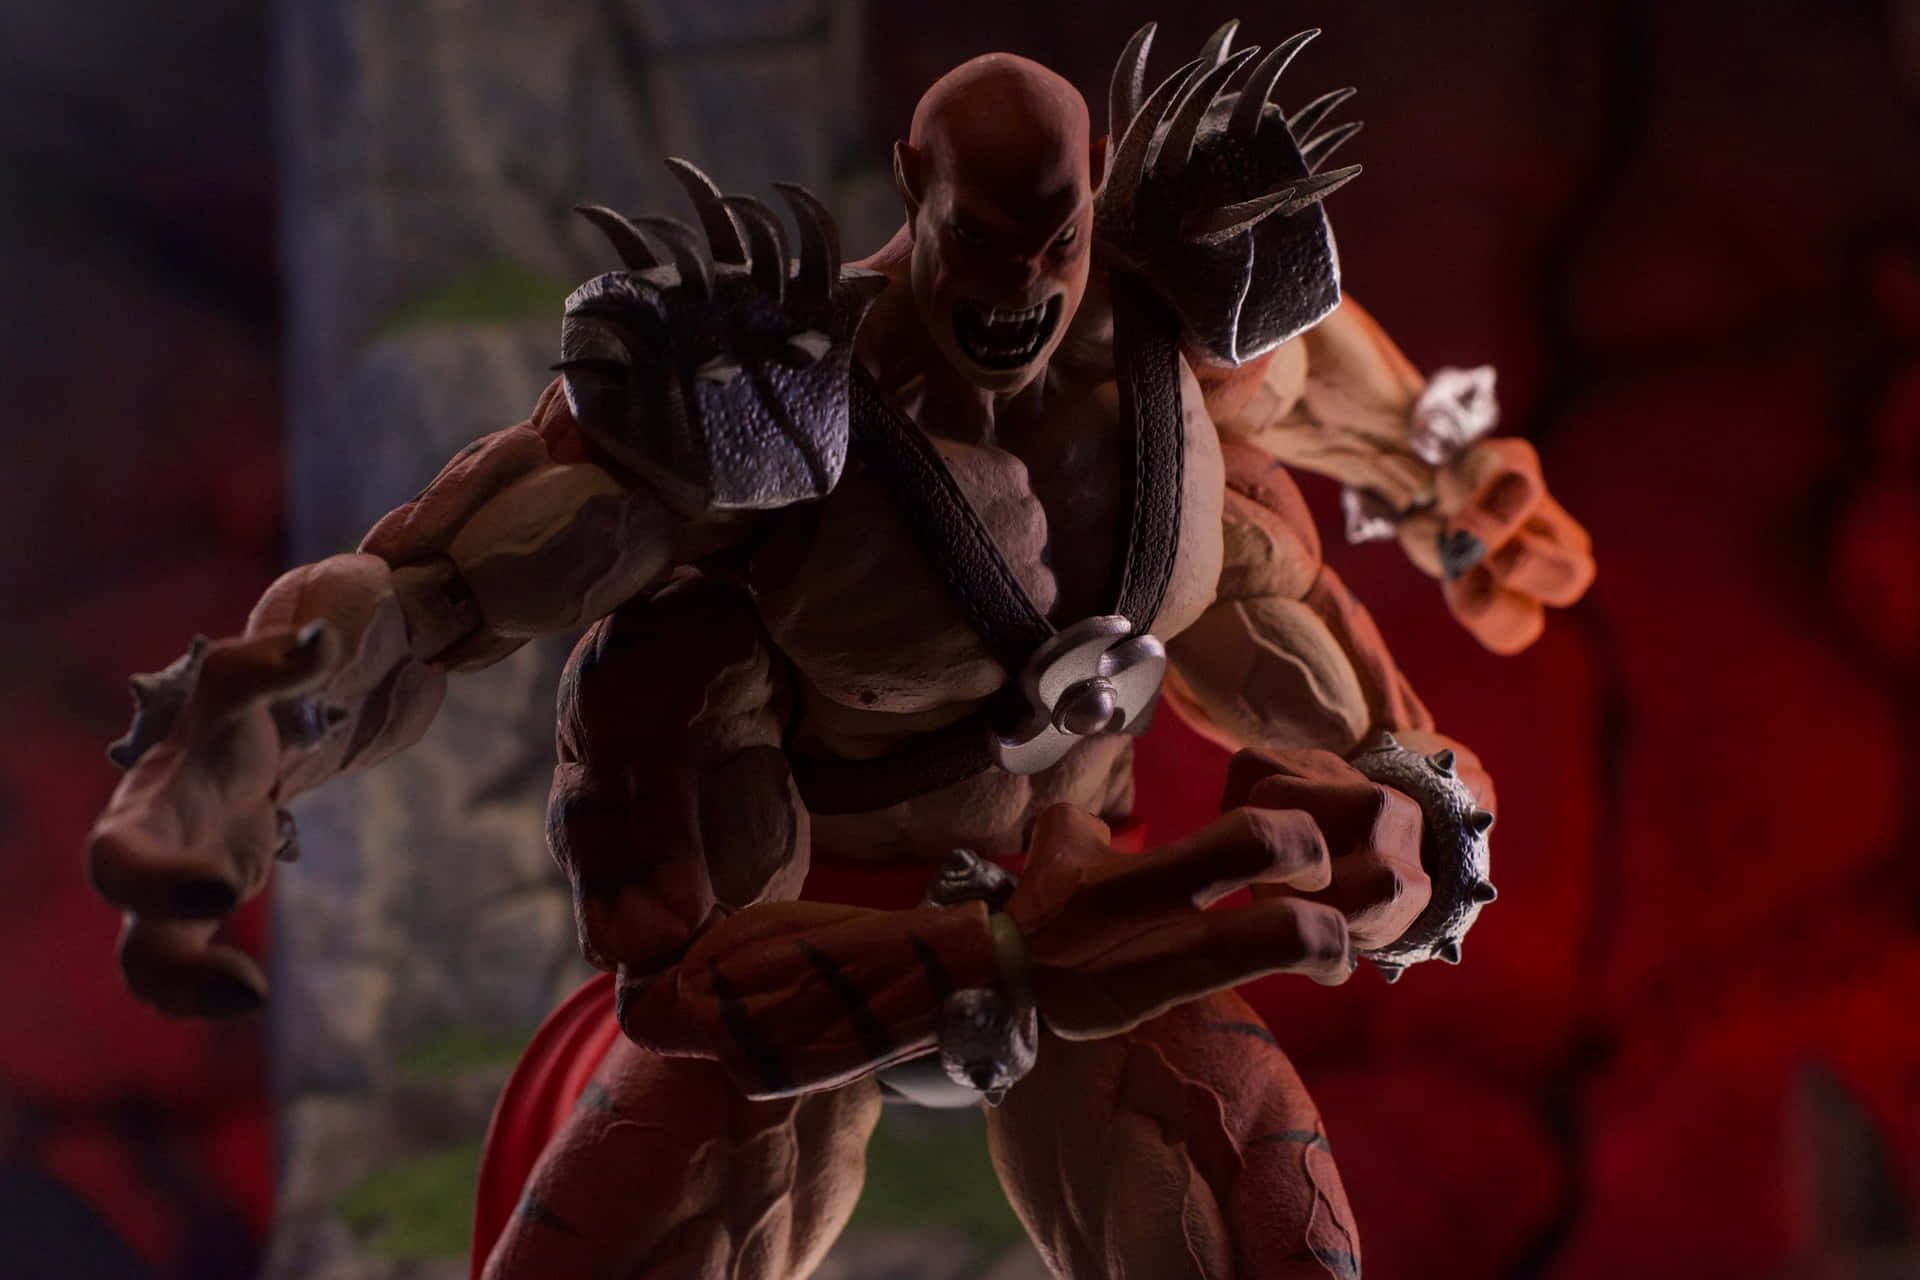 Kintaro in action, showcasing his mighty strength in Mortal Kombat. Wallpaper